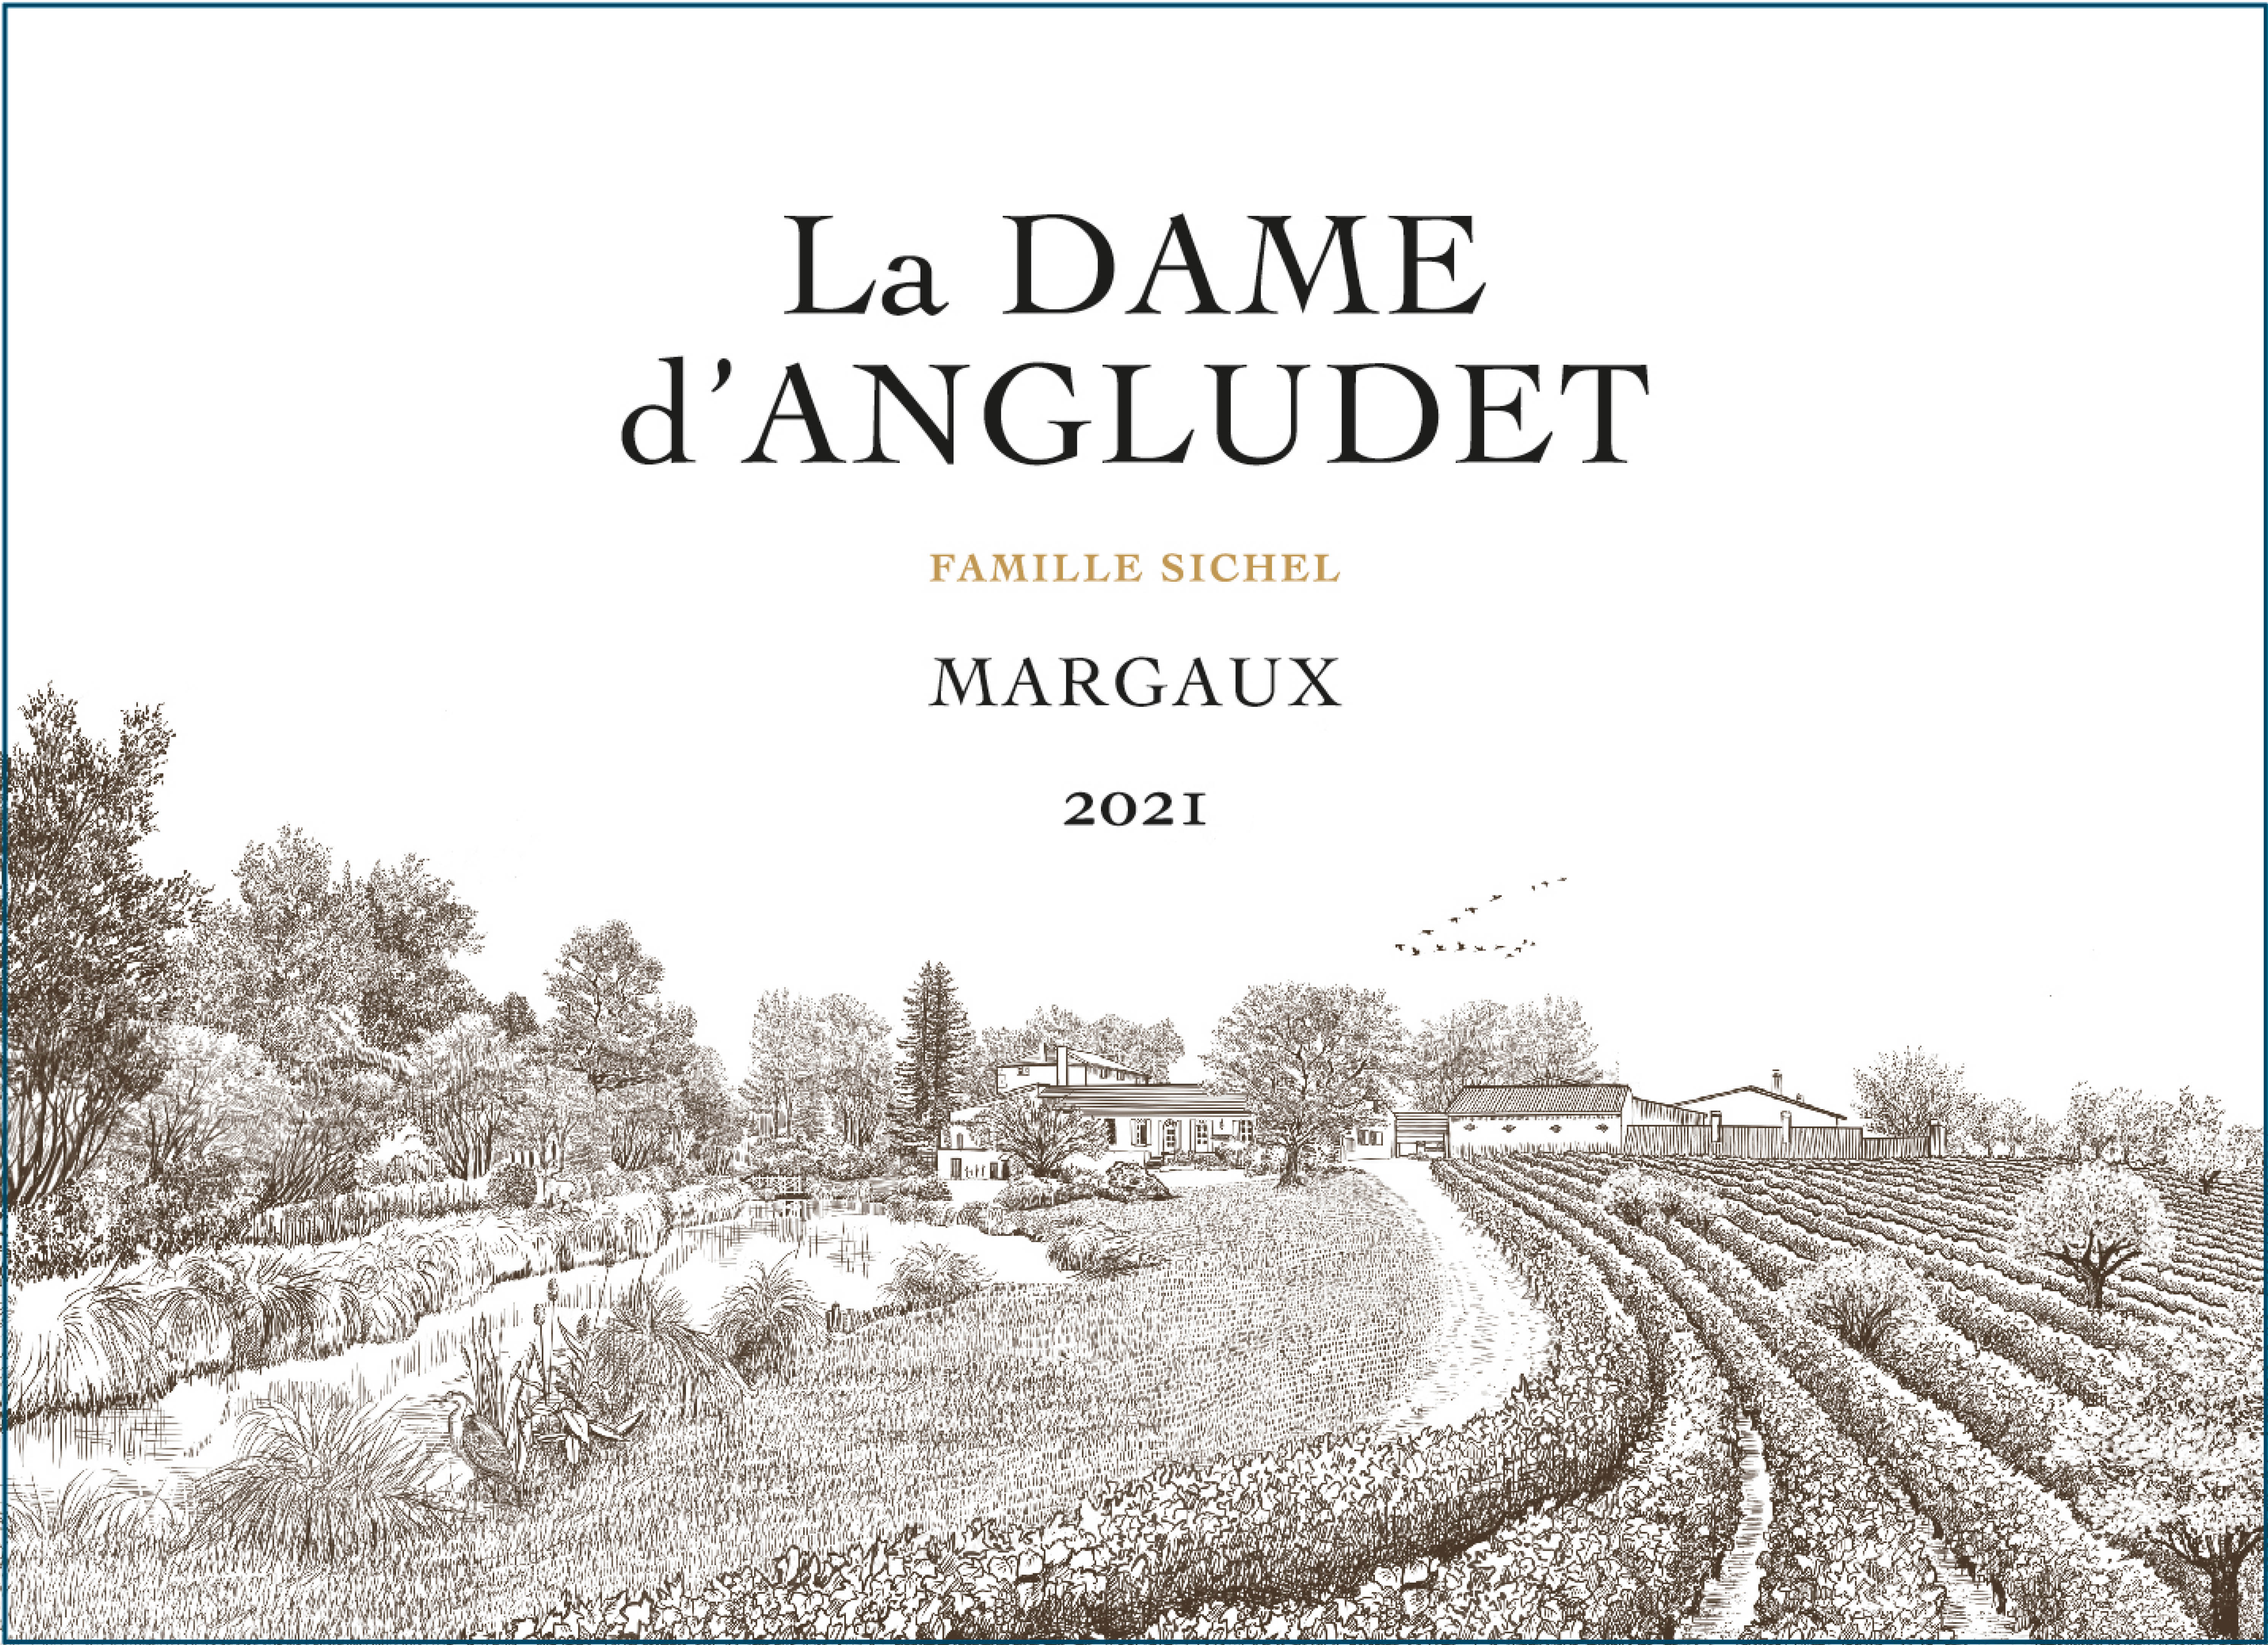 La Dame d'Angludet AOC Margaux Rouge 2021